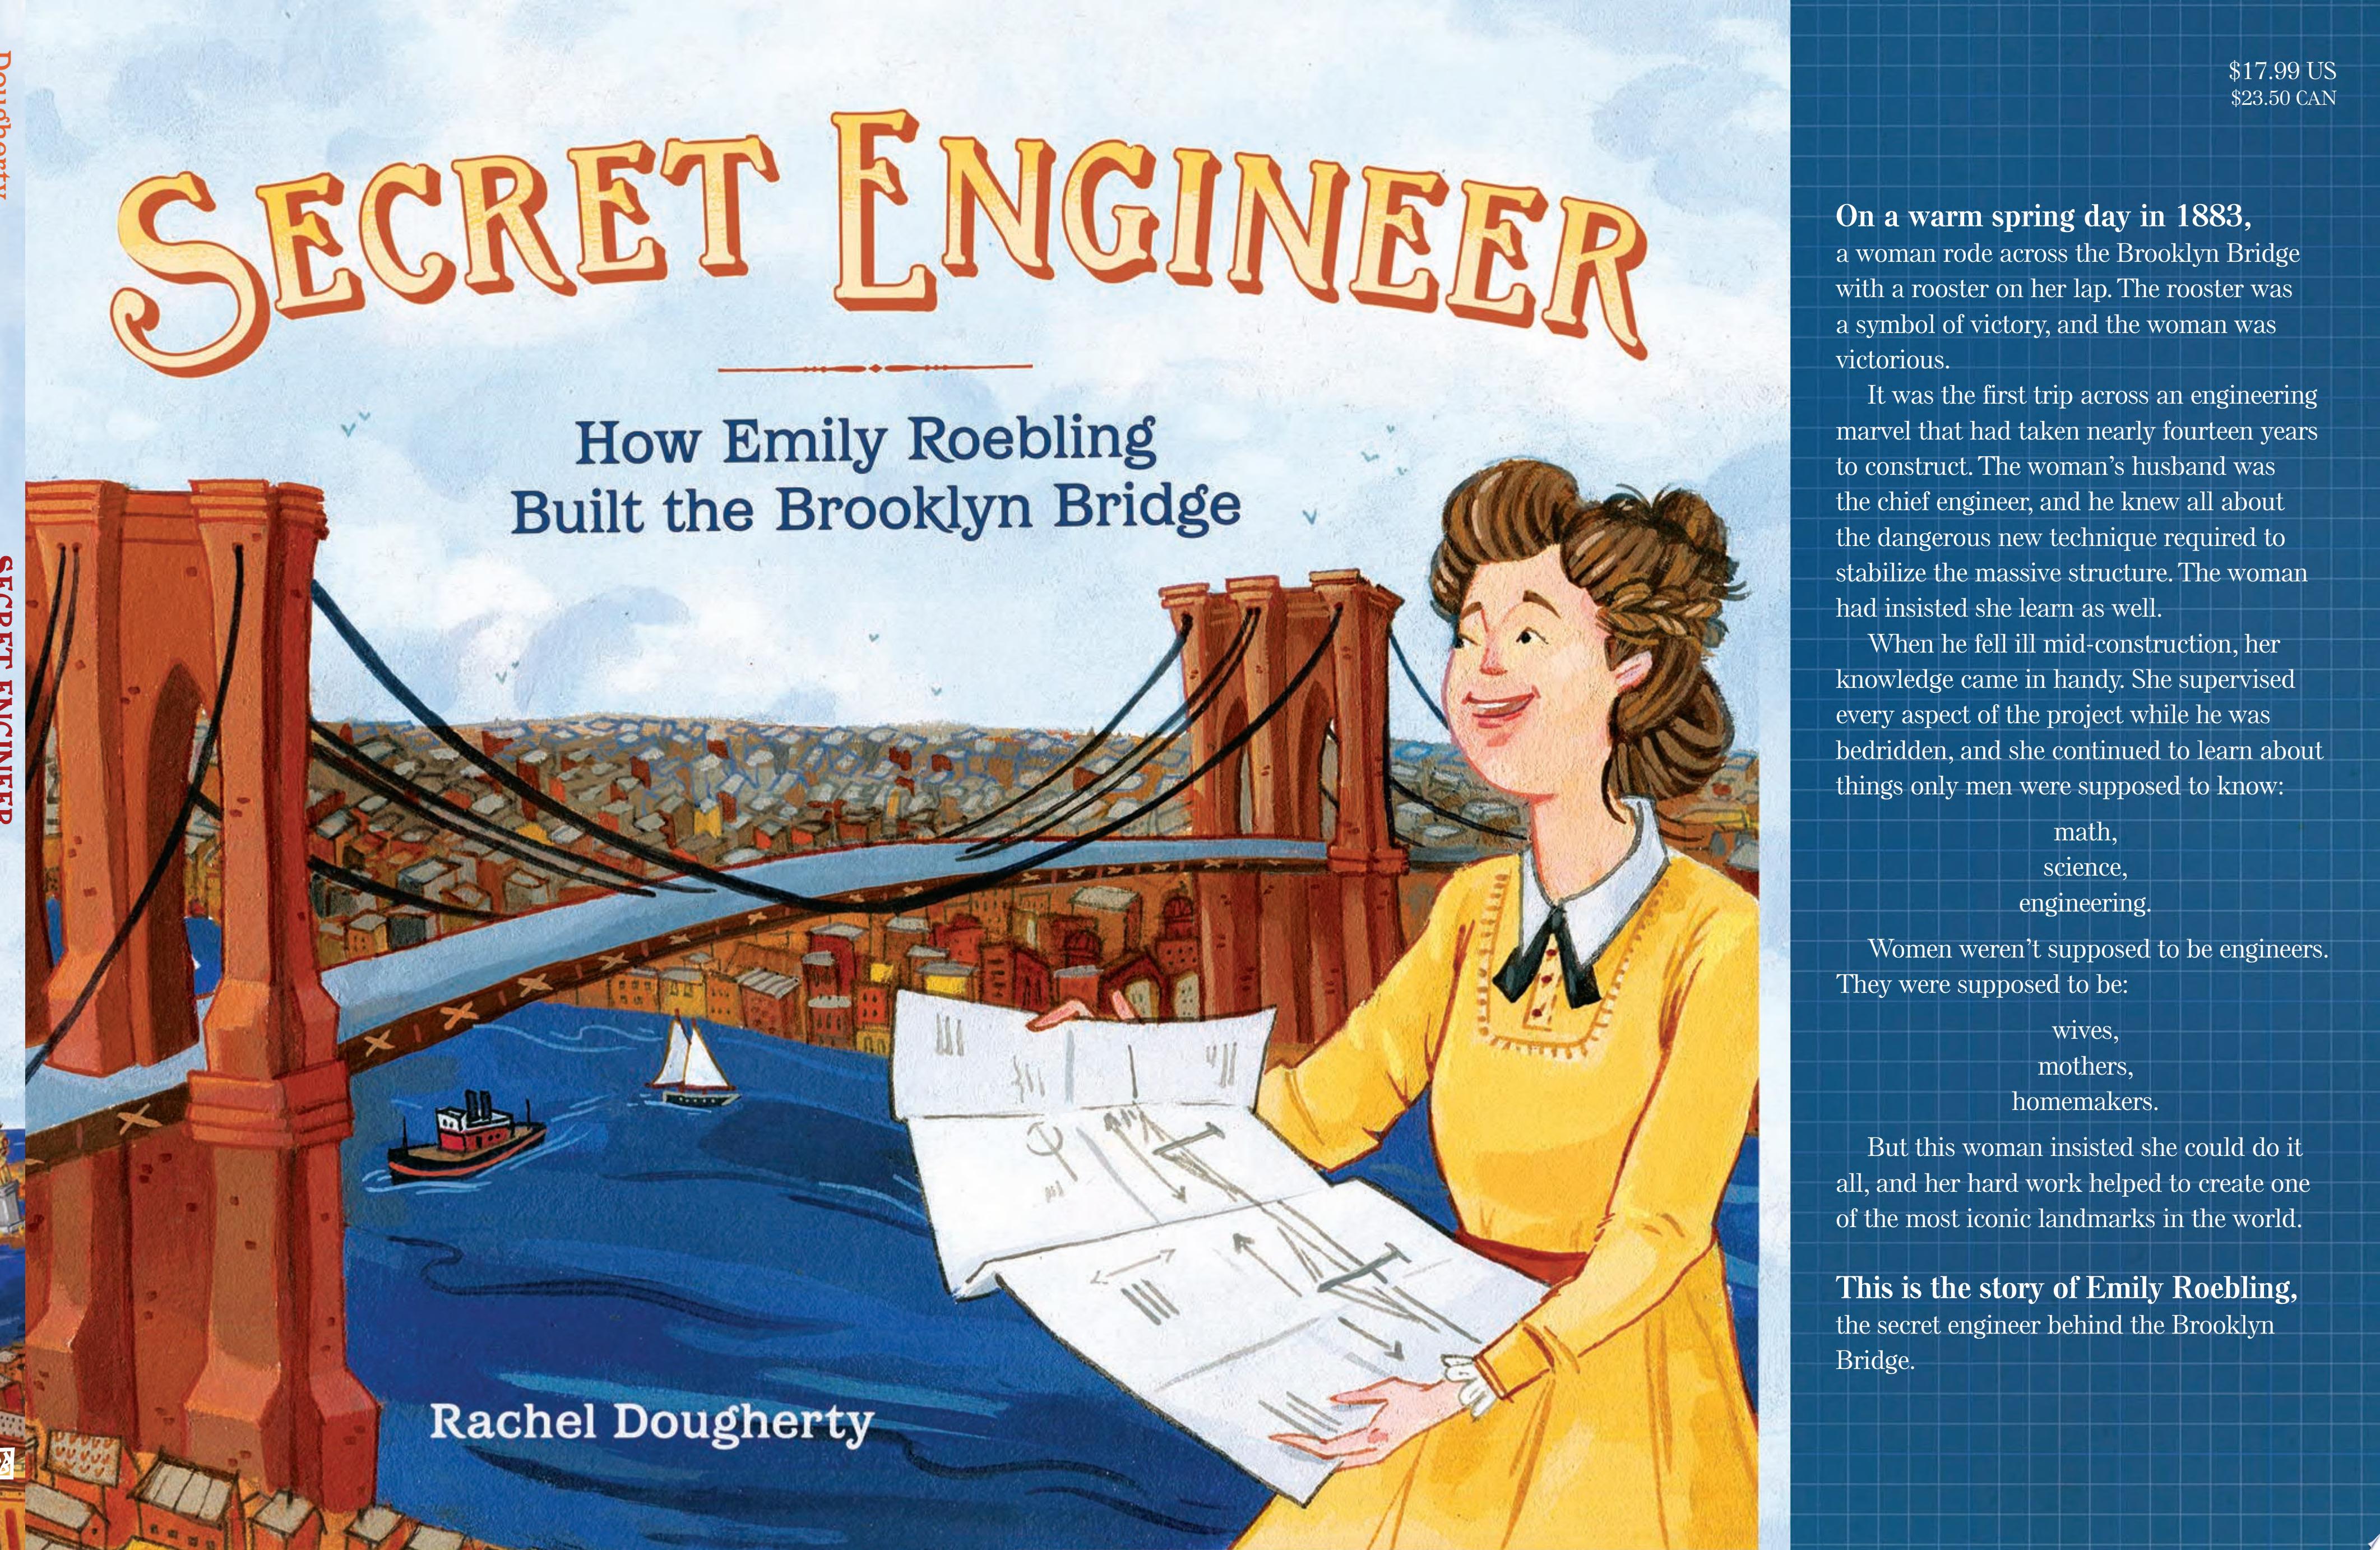 Image for "Secret Engineer: How Emily Roebling Built the Brooklyn Bridge"